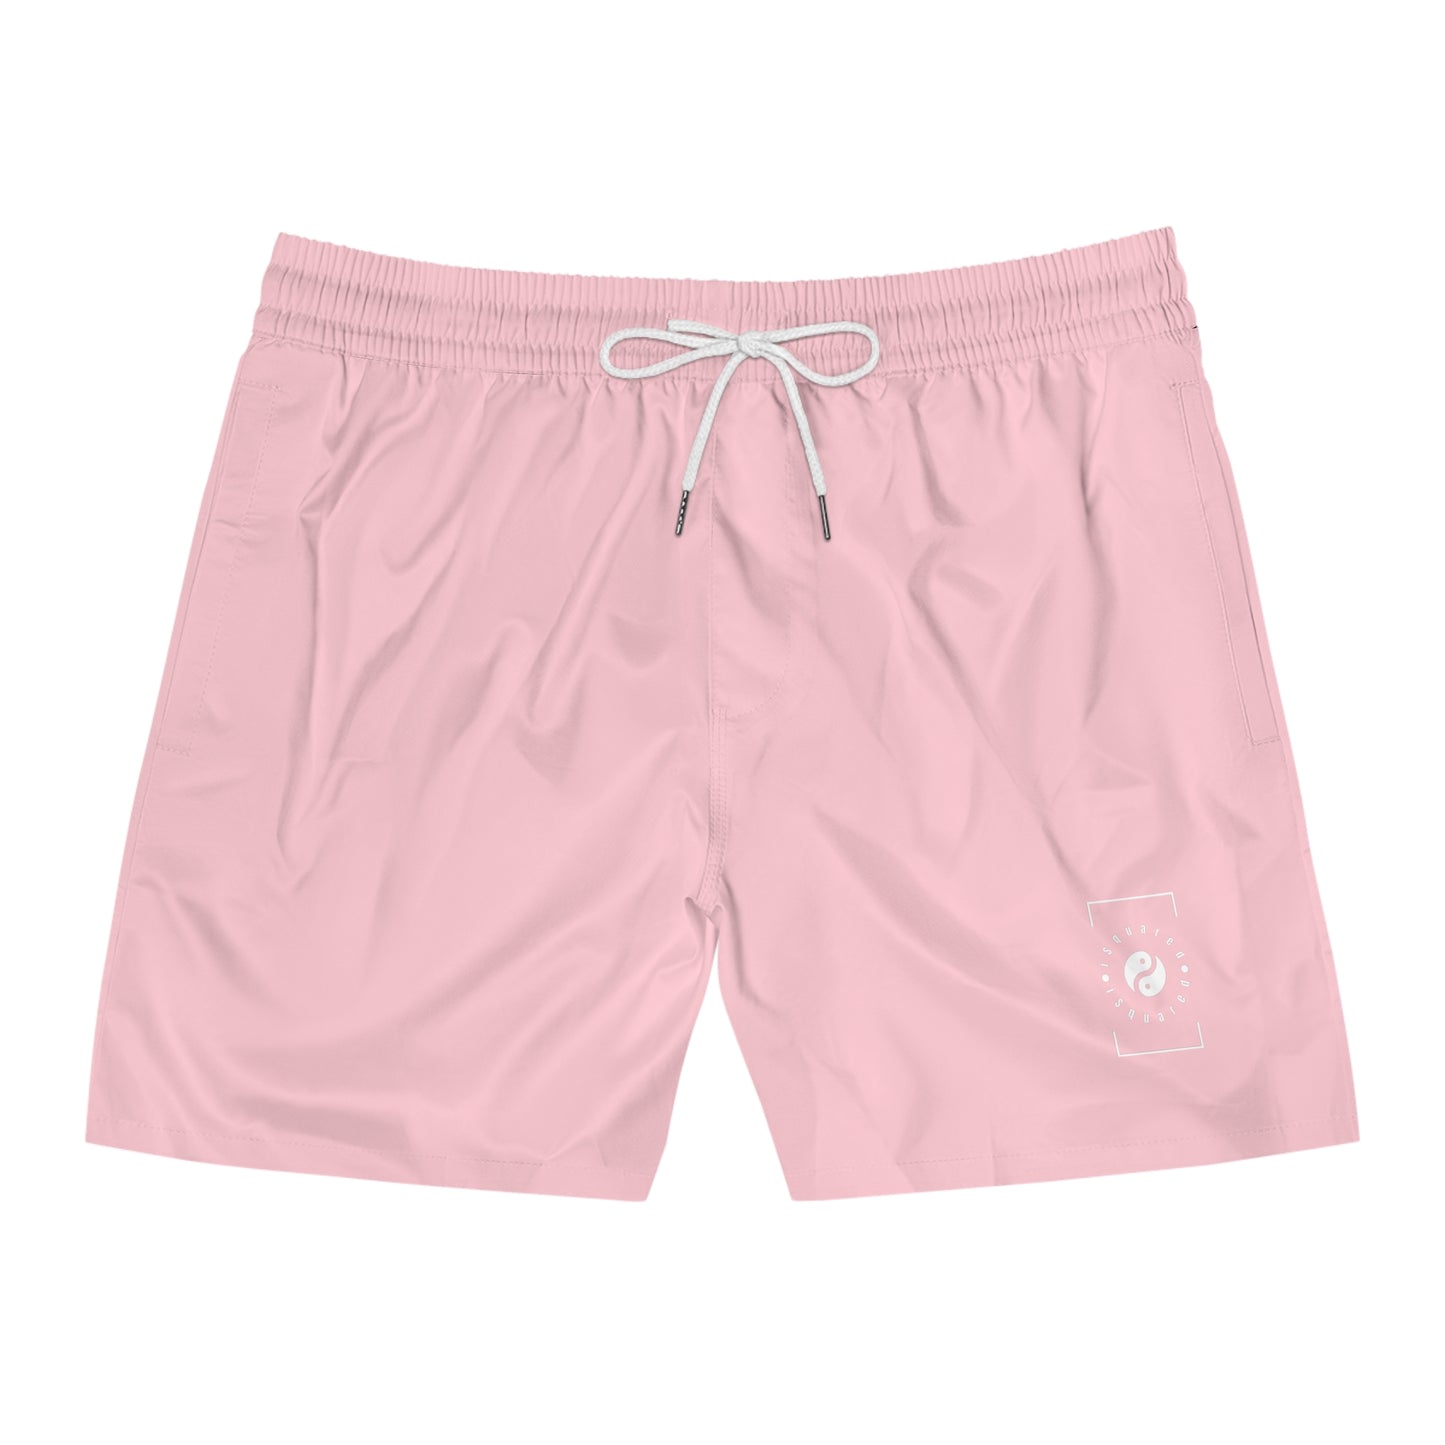 FFCCD4 Light Pink - Swim Shorts (Solid Color) for Men